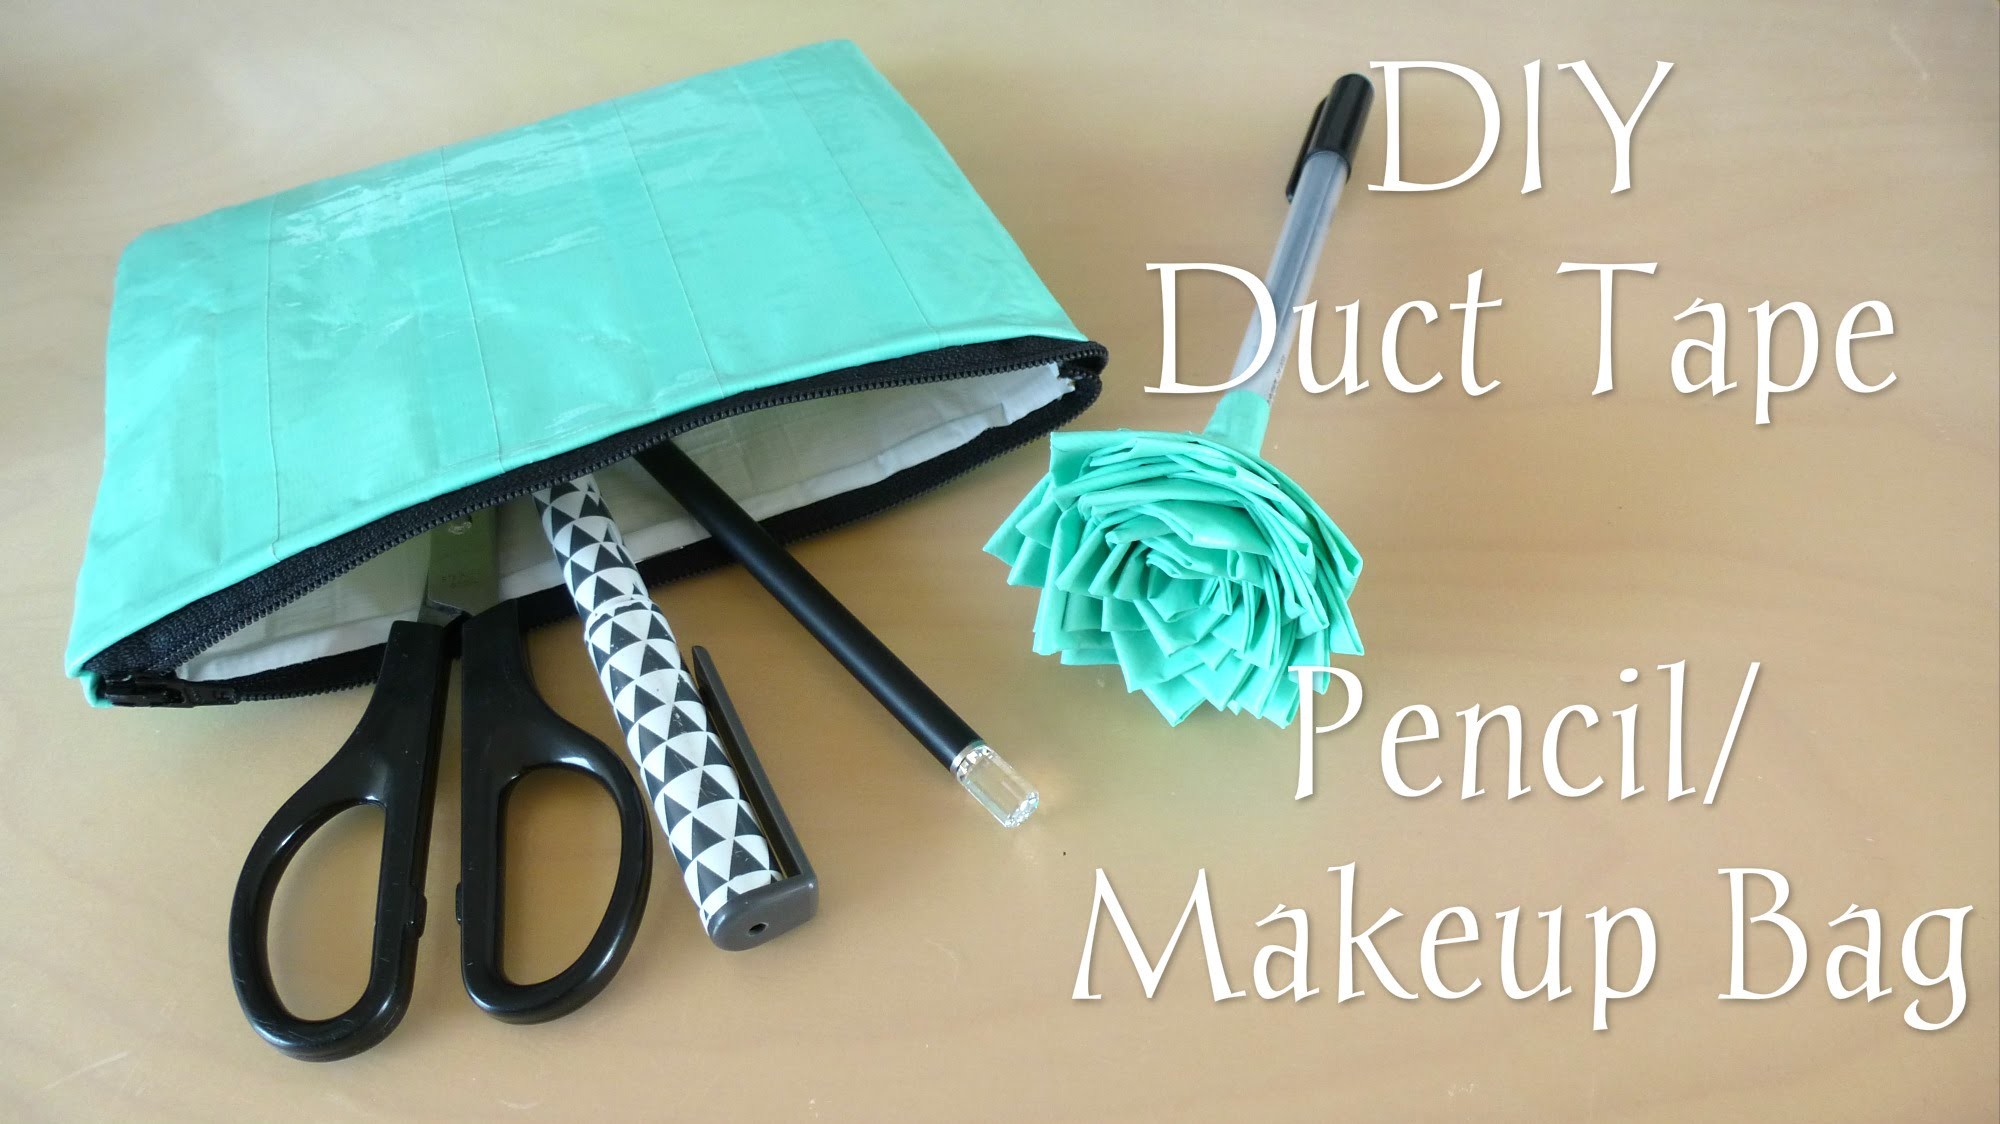 DIY Duct Tape Pencil.Makeup Bag